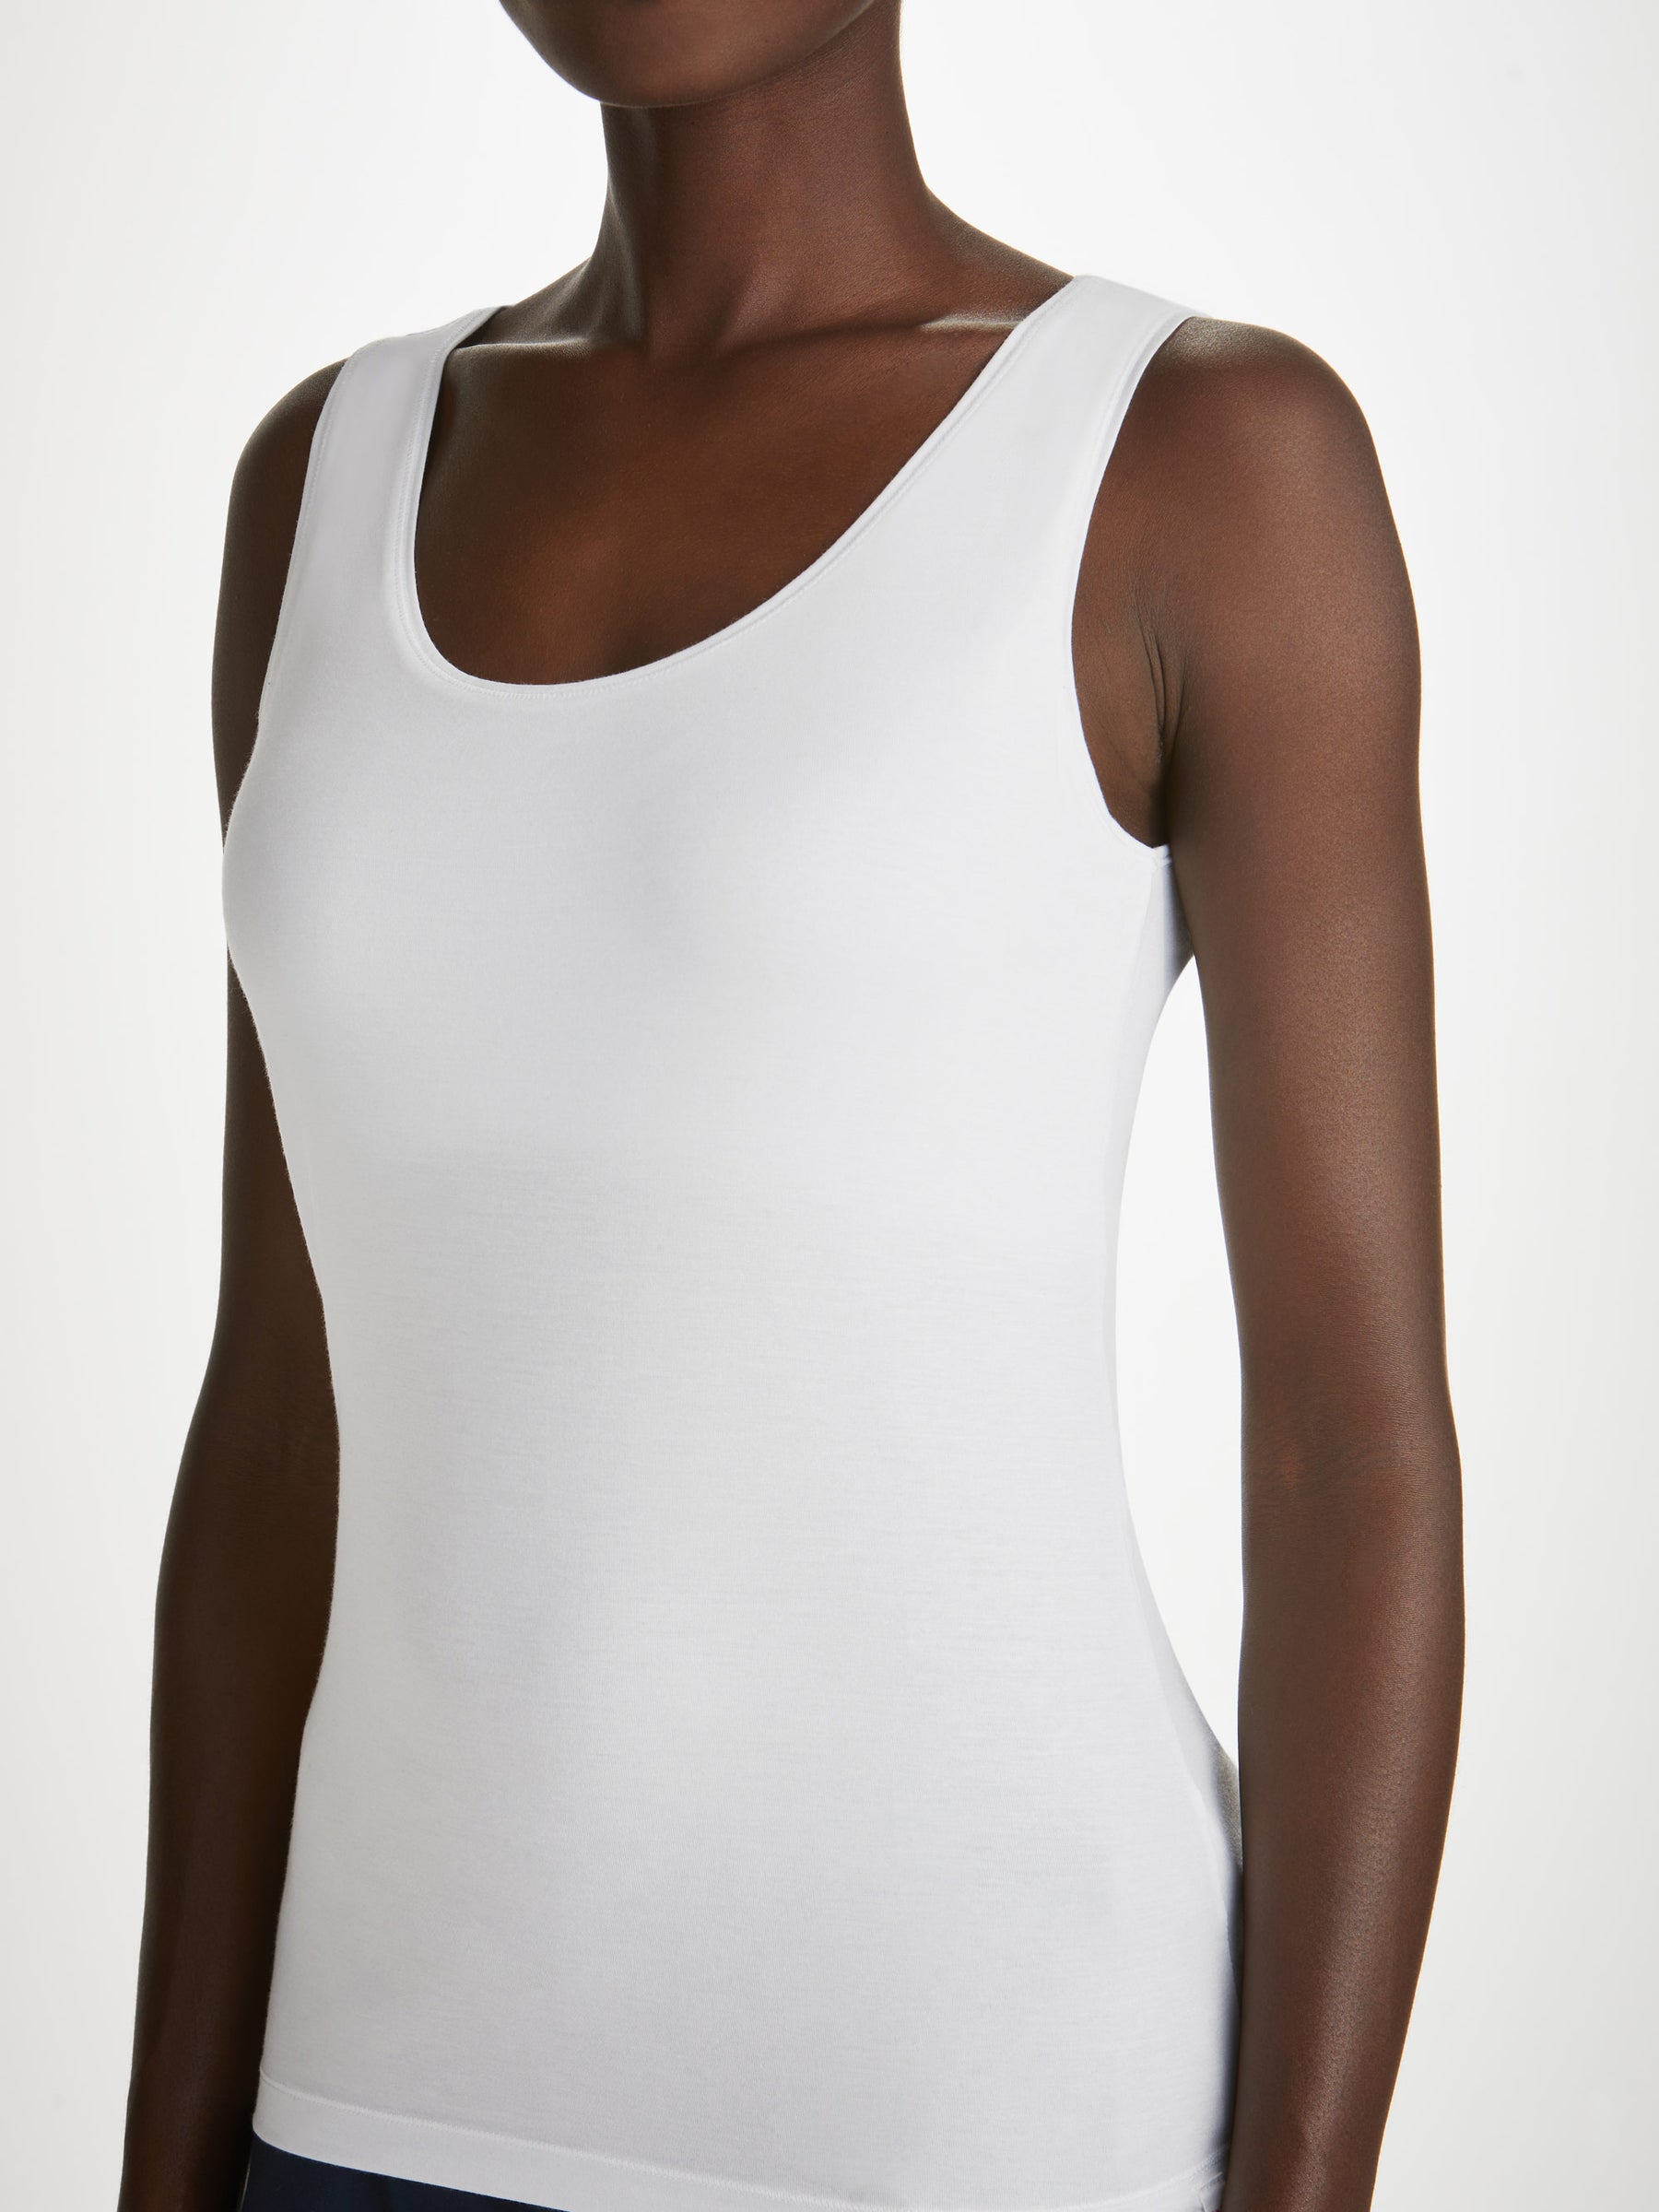 Women's Support Vest Lara Micro Modal Stretch White